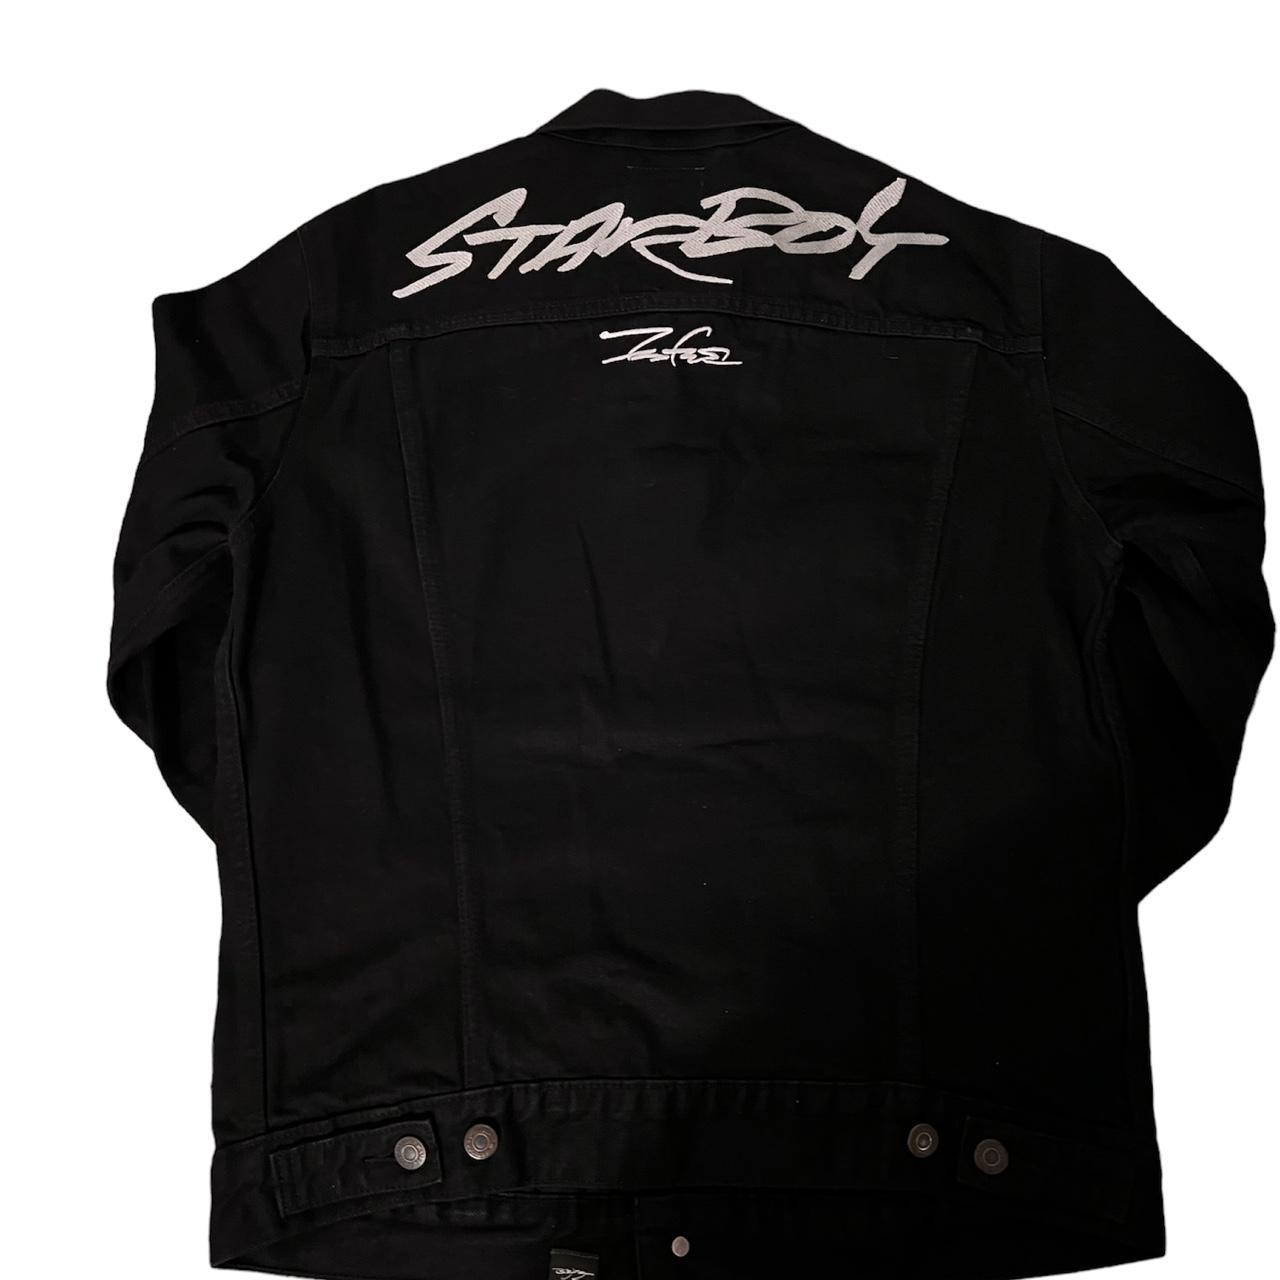 The Weeknd x Futura Starboy Denim Jacket The Weeknd